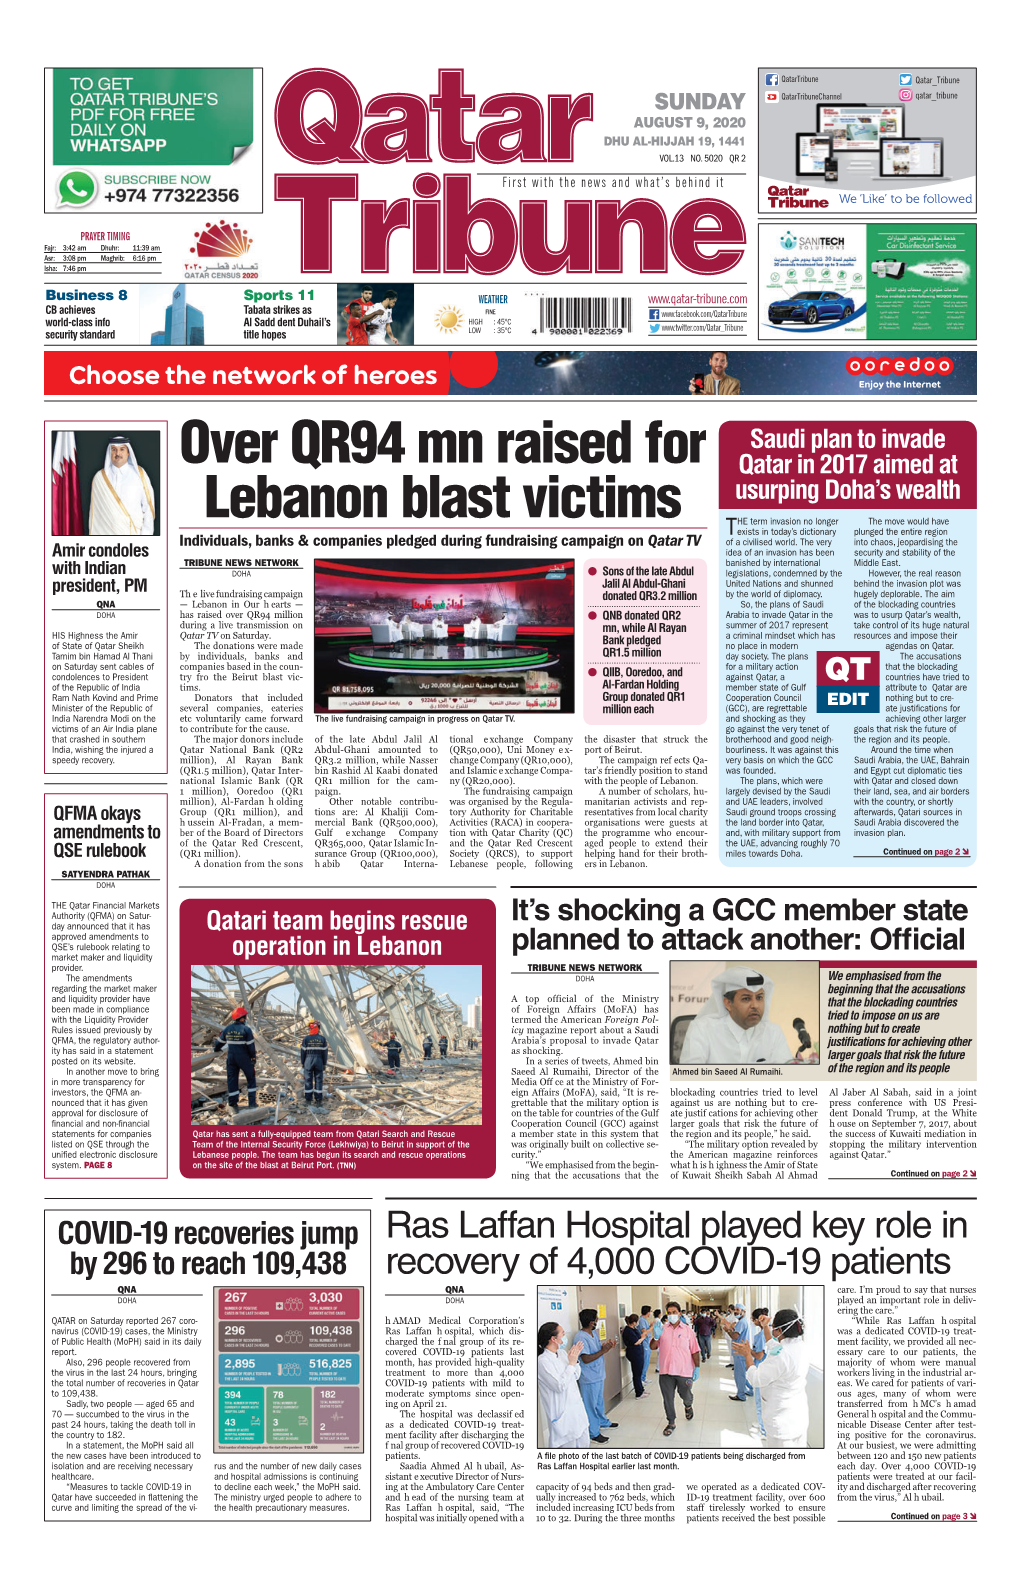 Over QR94 Mn Raised for Lebanon Blast Victims